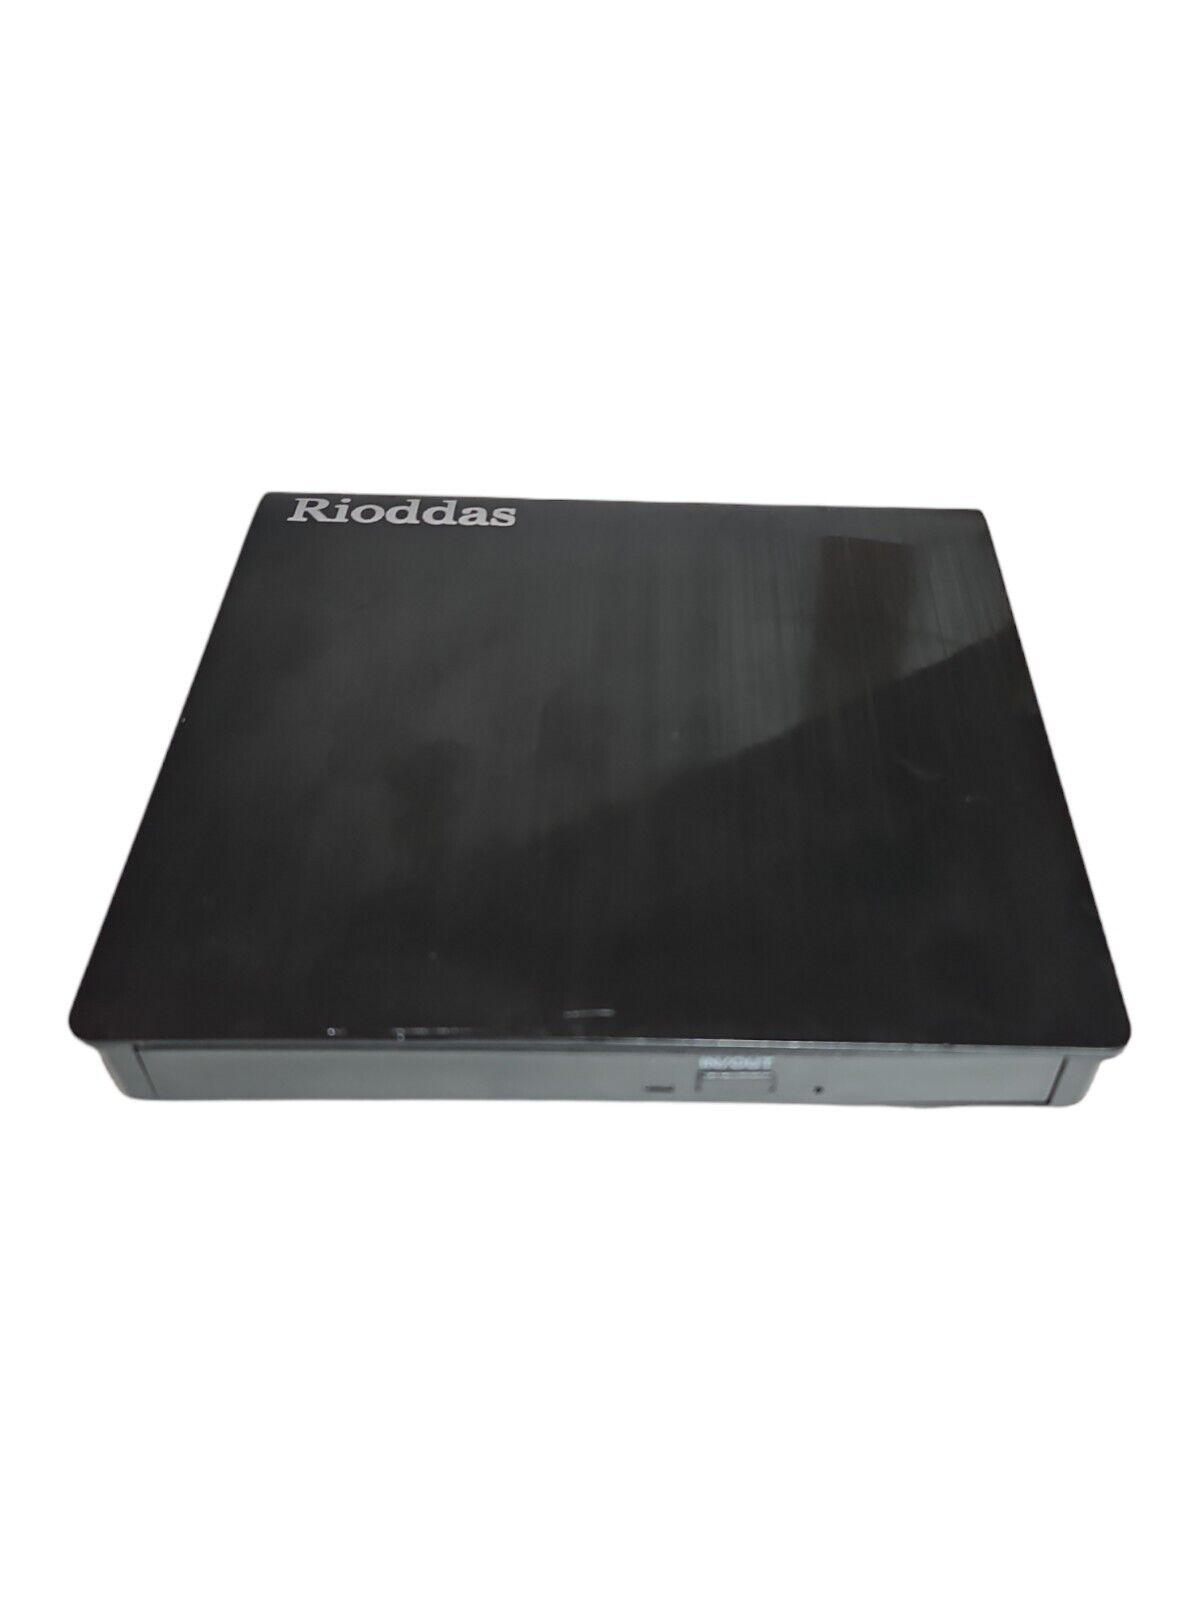 Rioddas BT638 USB 3.0 Portable External ODD /HDD Device